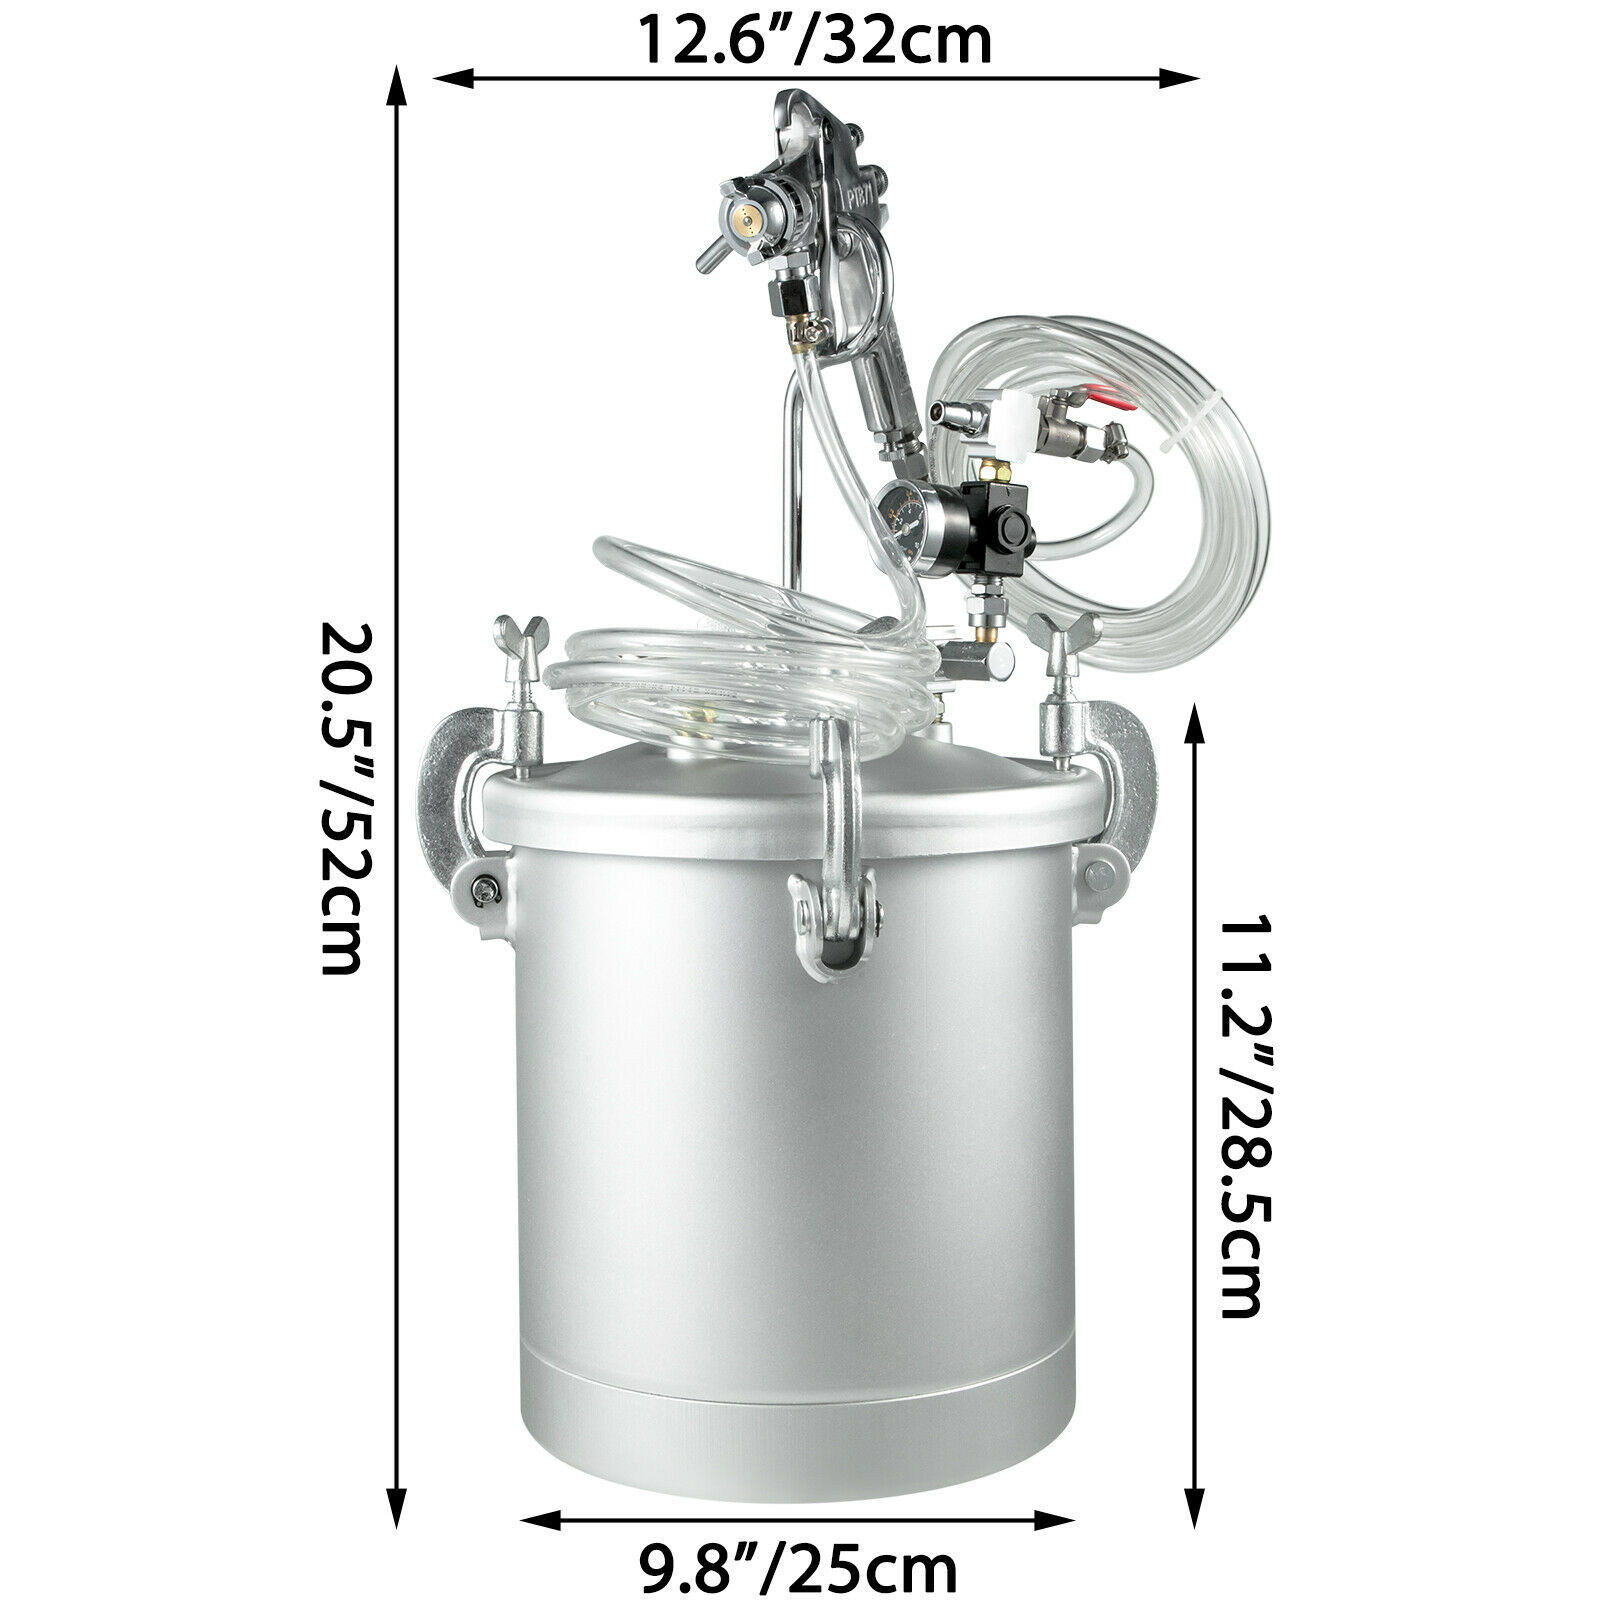 VEVOR Paint Tank 10L Pressure Pot Paint Sprayer 2.5 Gallon Pressure Spray Gun Regulator (10L 1.5mm)